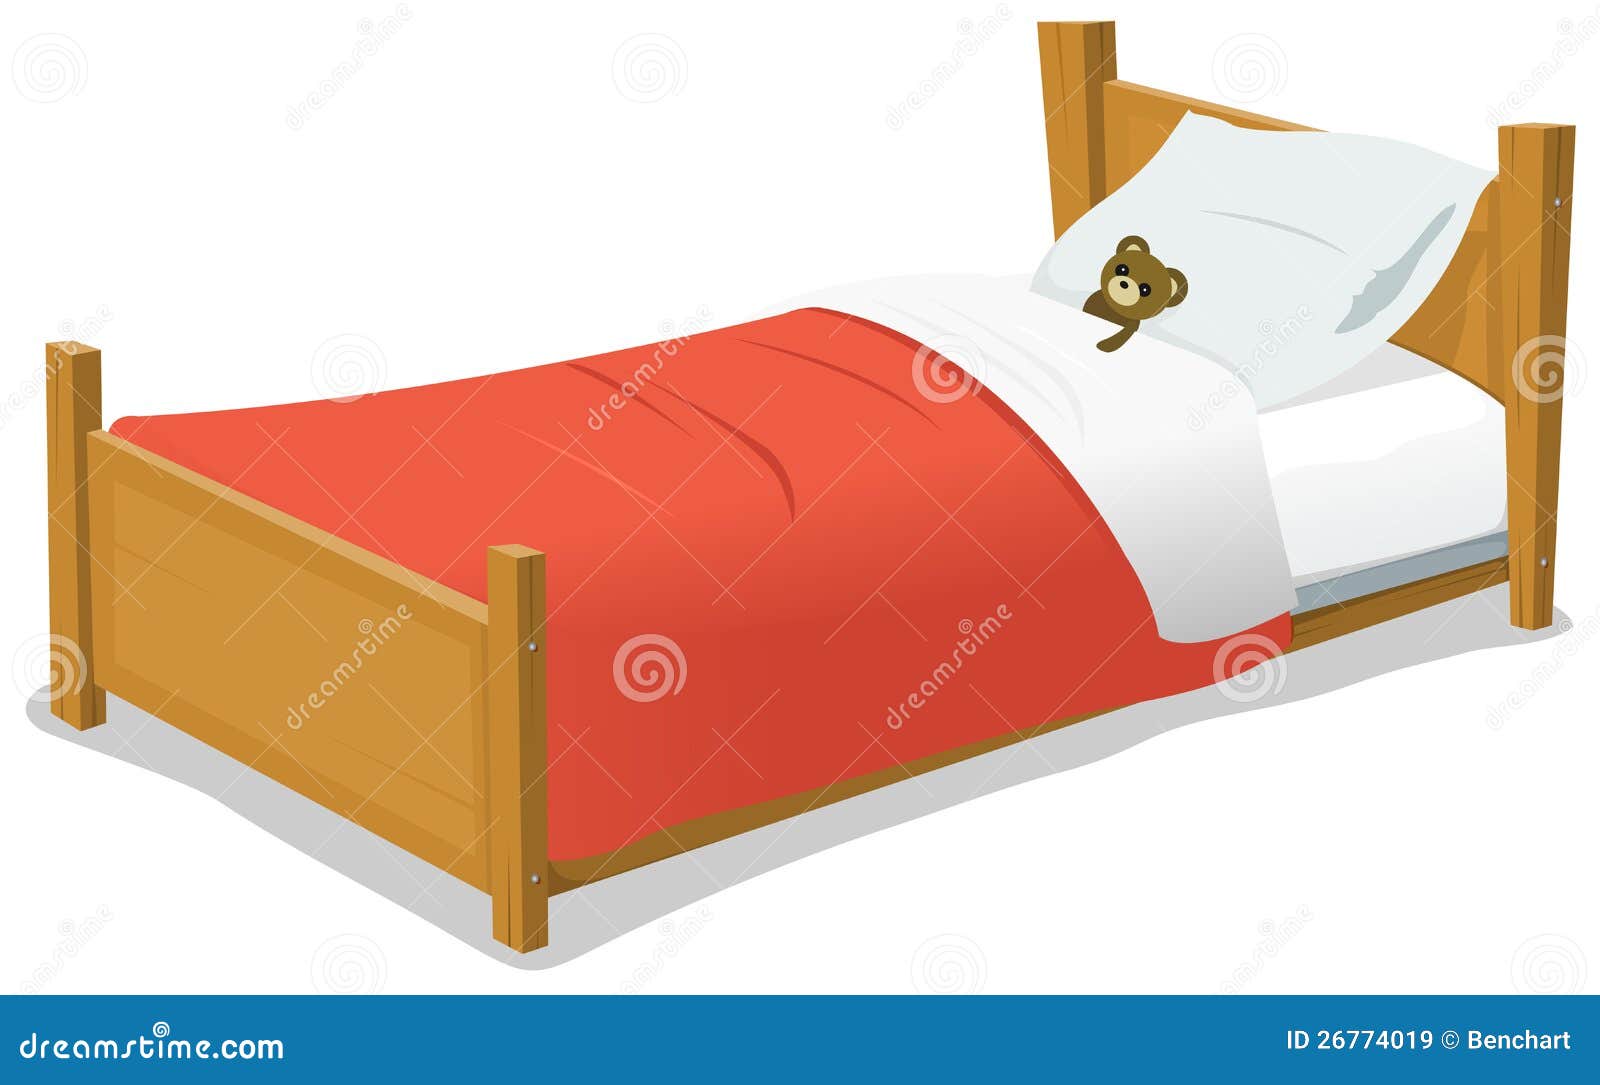 Cartoon Bed Cartoon bed with teddy bear